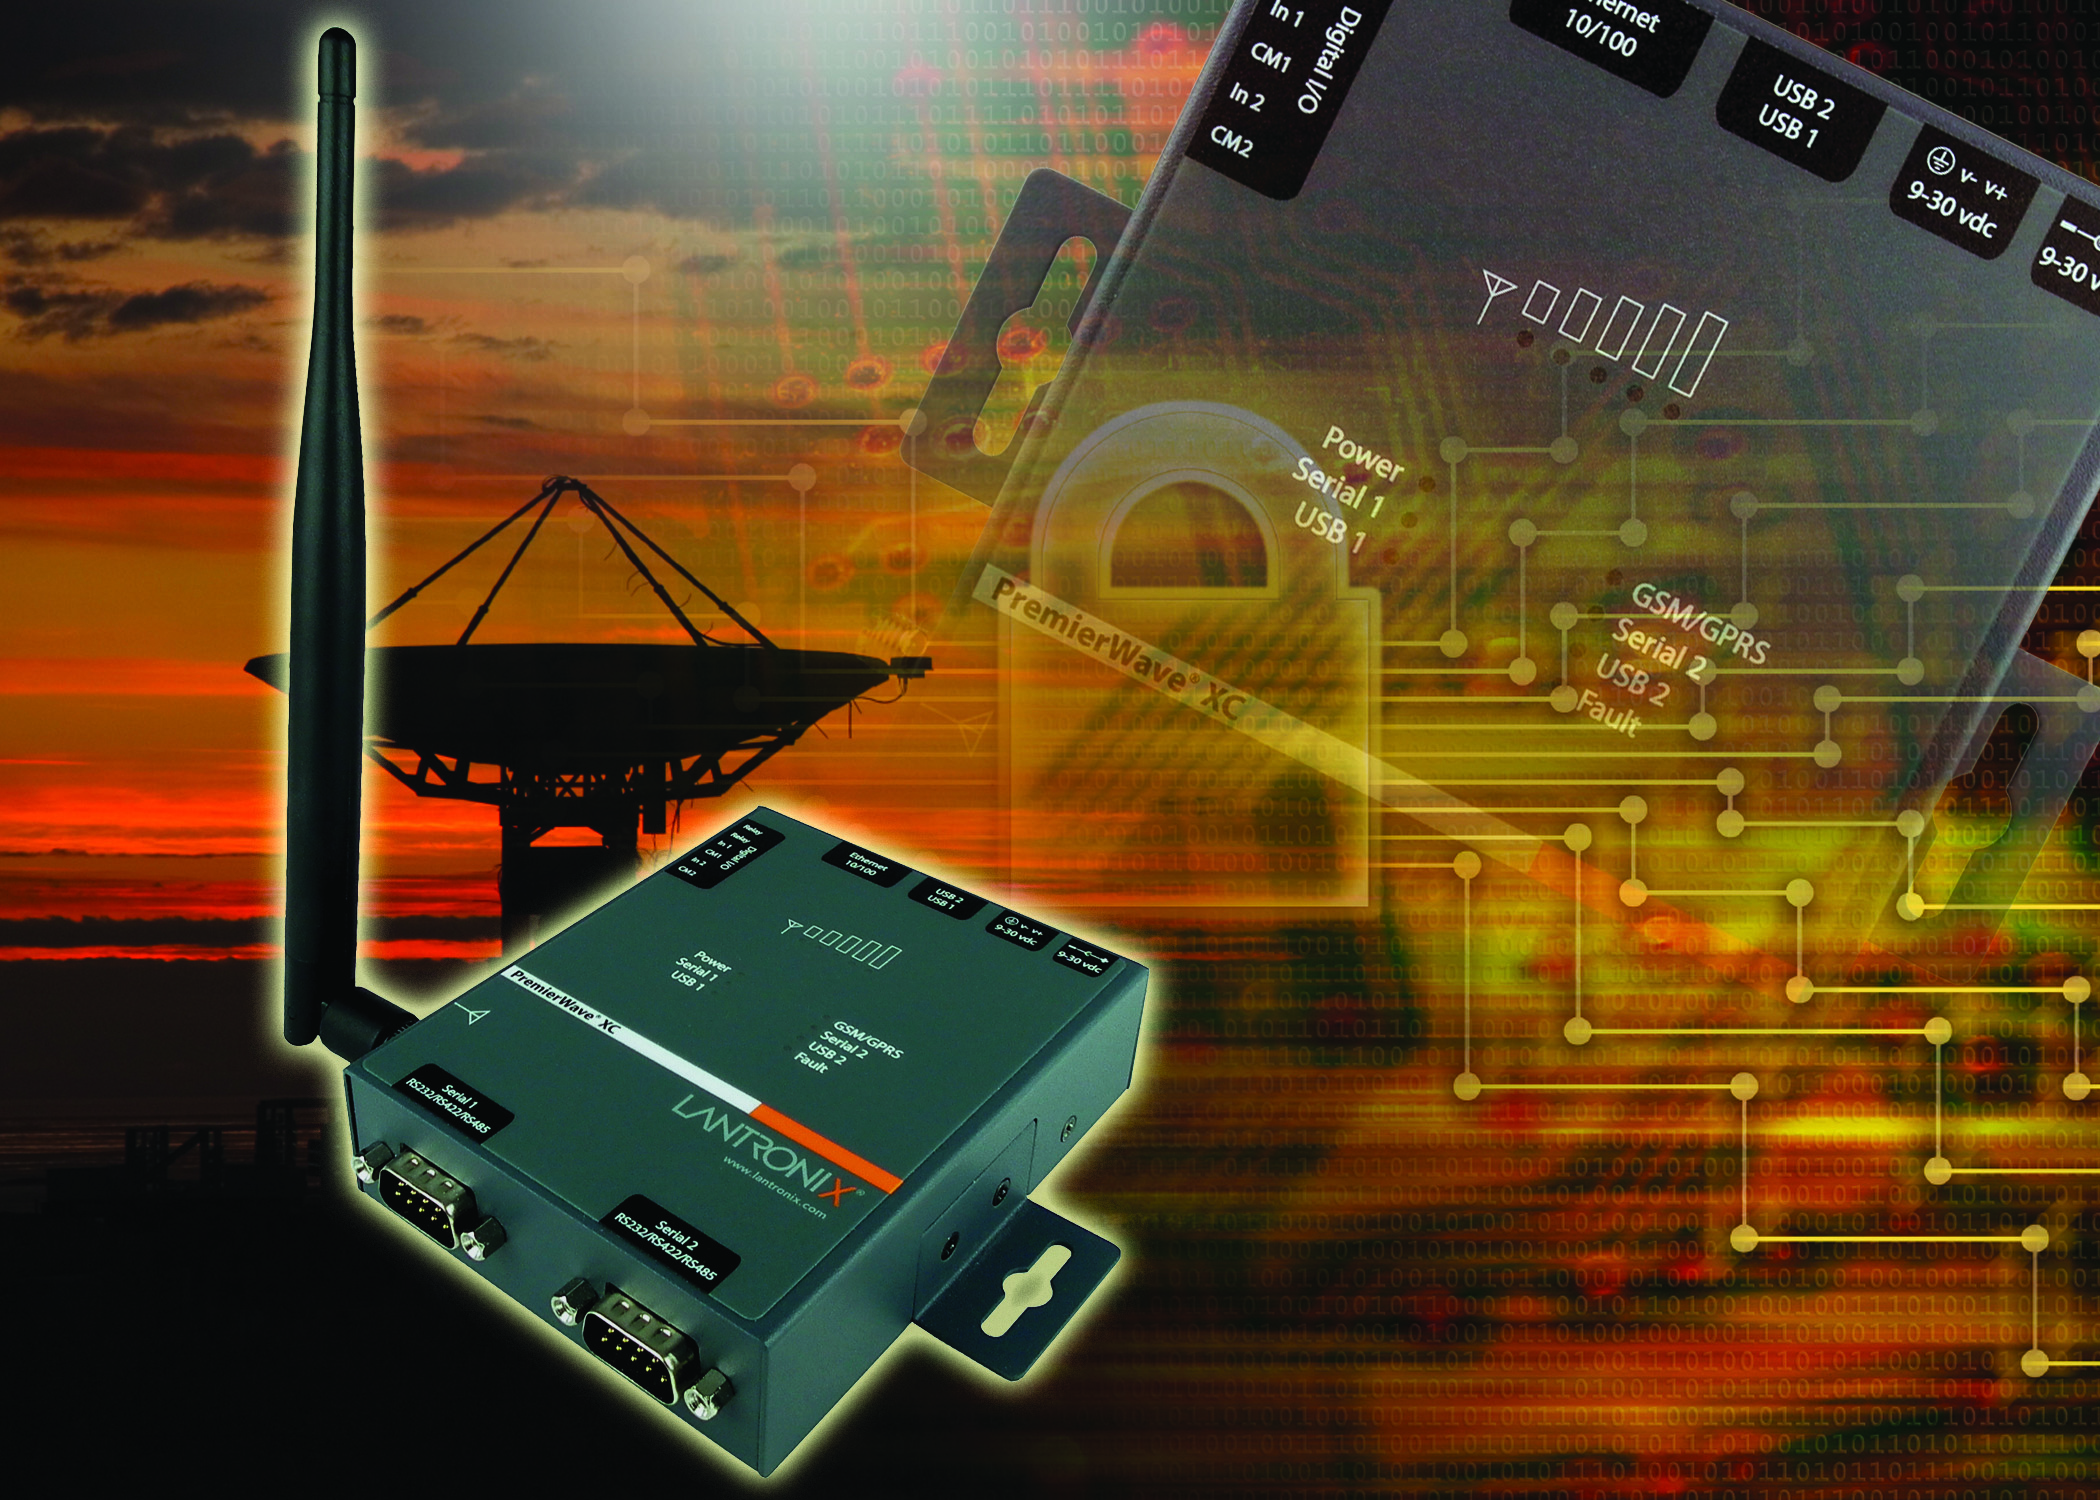 Acal BFI offers Lantronix PermierWave XC hybrid GSM/GPRS serial-device server